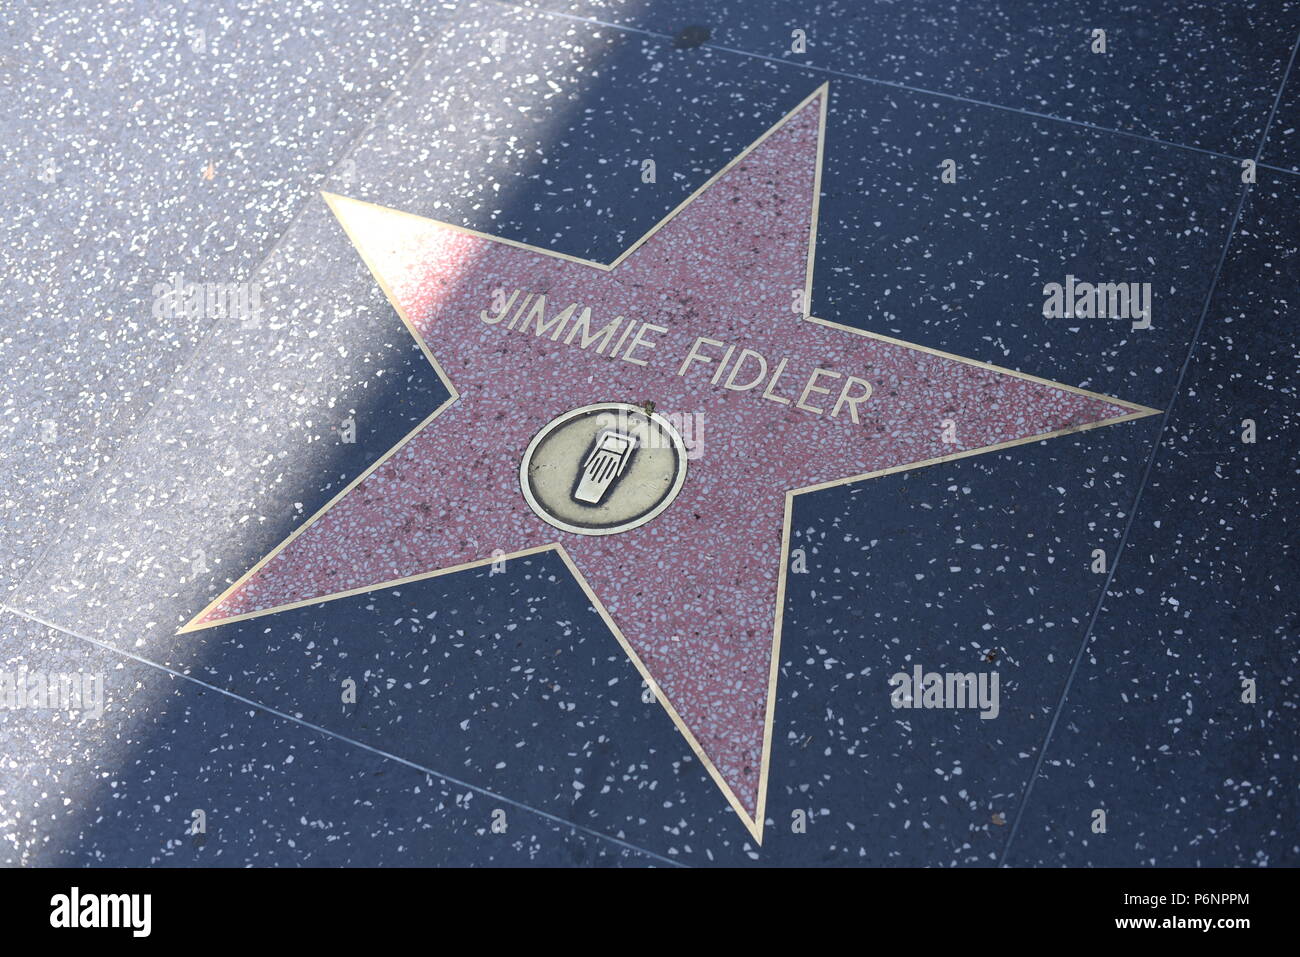 HOLLYWOOD, CA - 29 Giugno: Jimmie Fidler stella sulla Hollywood Walk of Fame in Hollywood, la California il 29 giugno 2018. Foto Stock